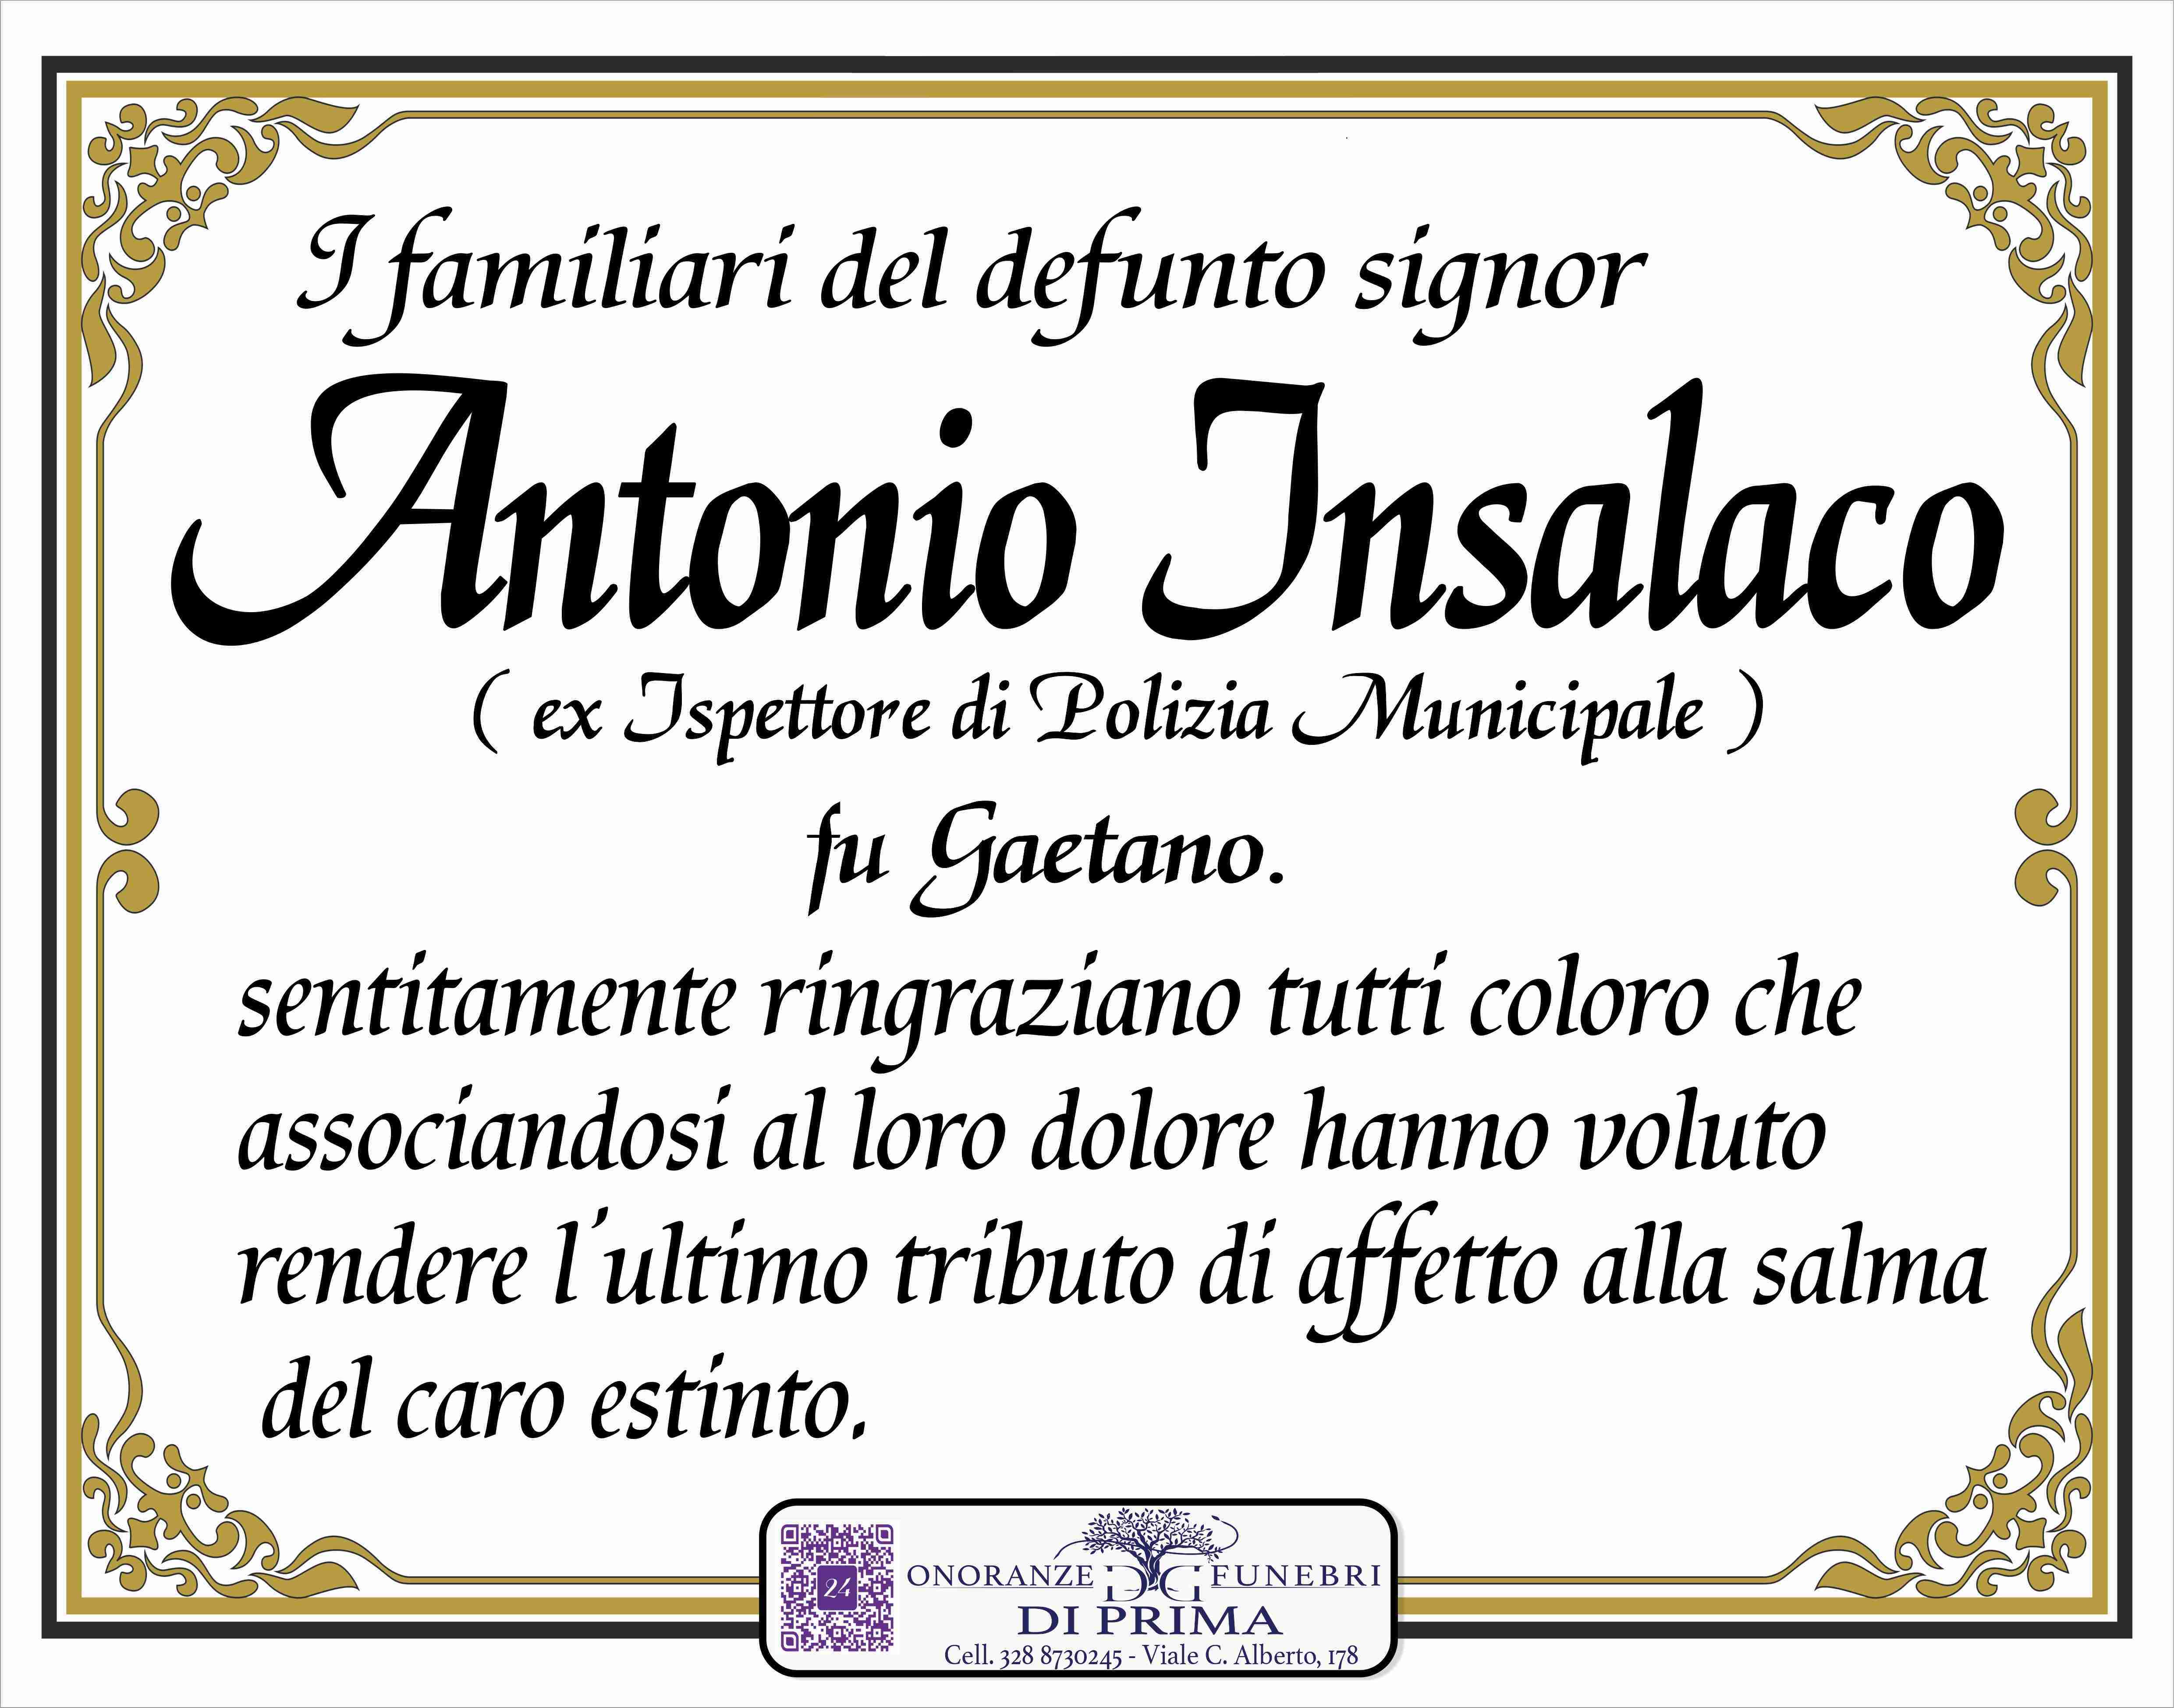 Antonio Insalaco